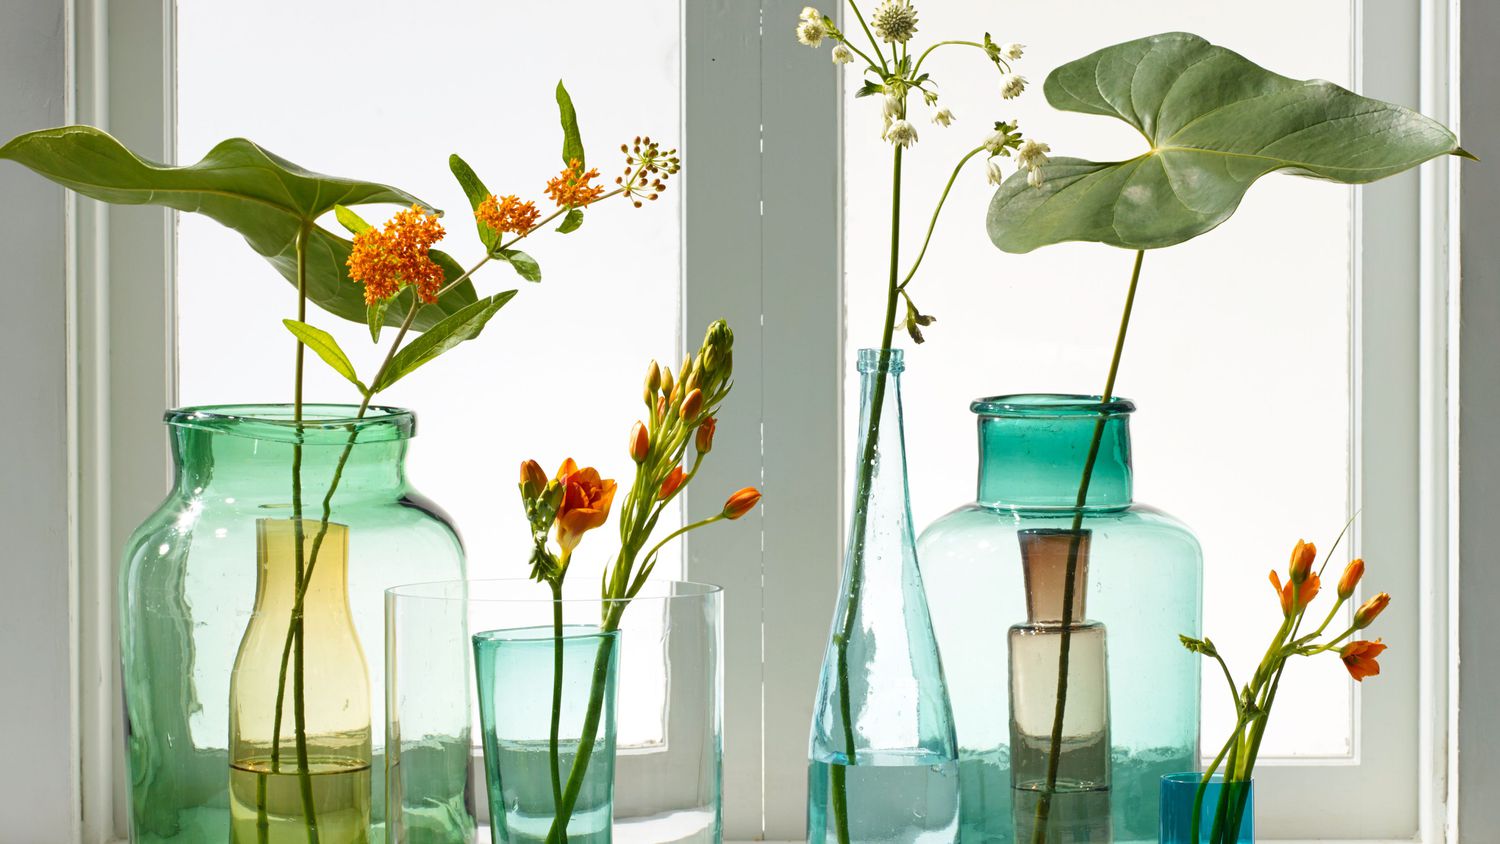 vase within vase arrangements